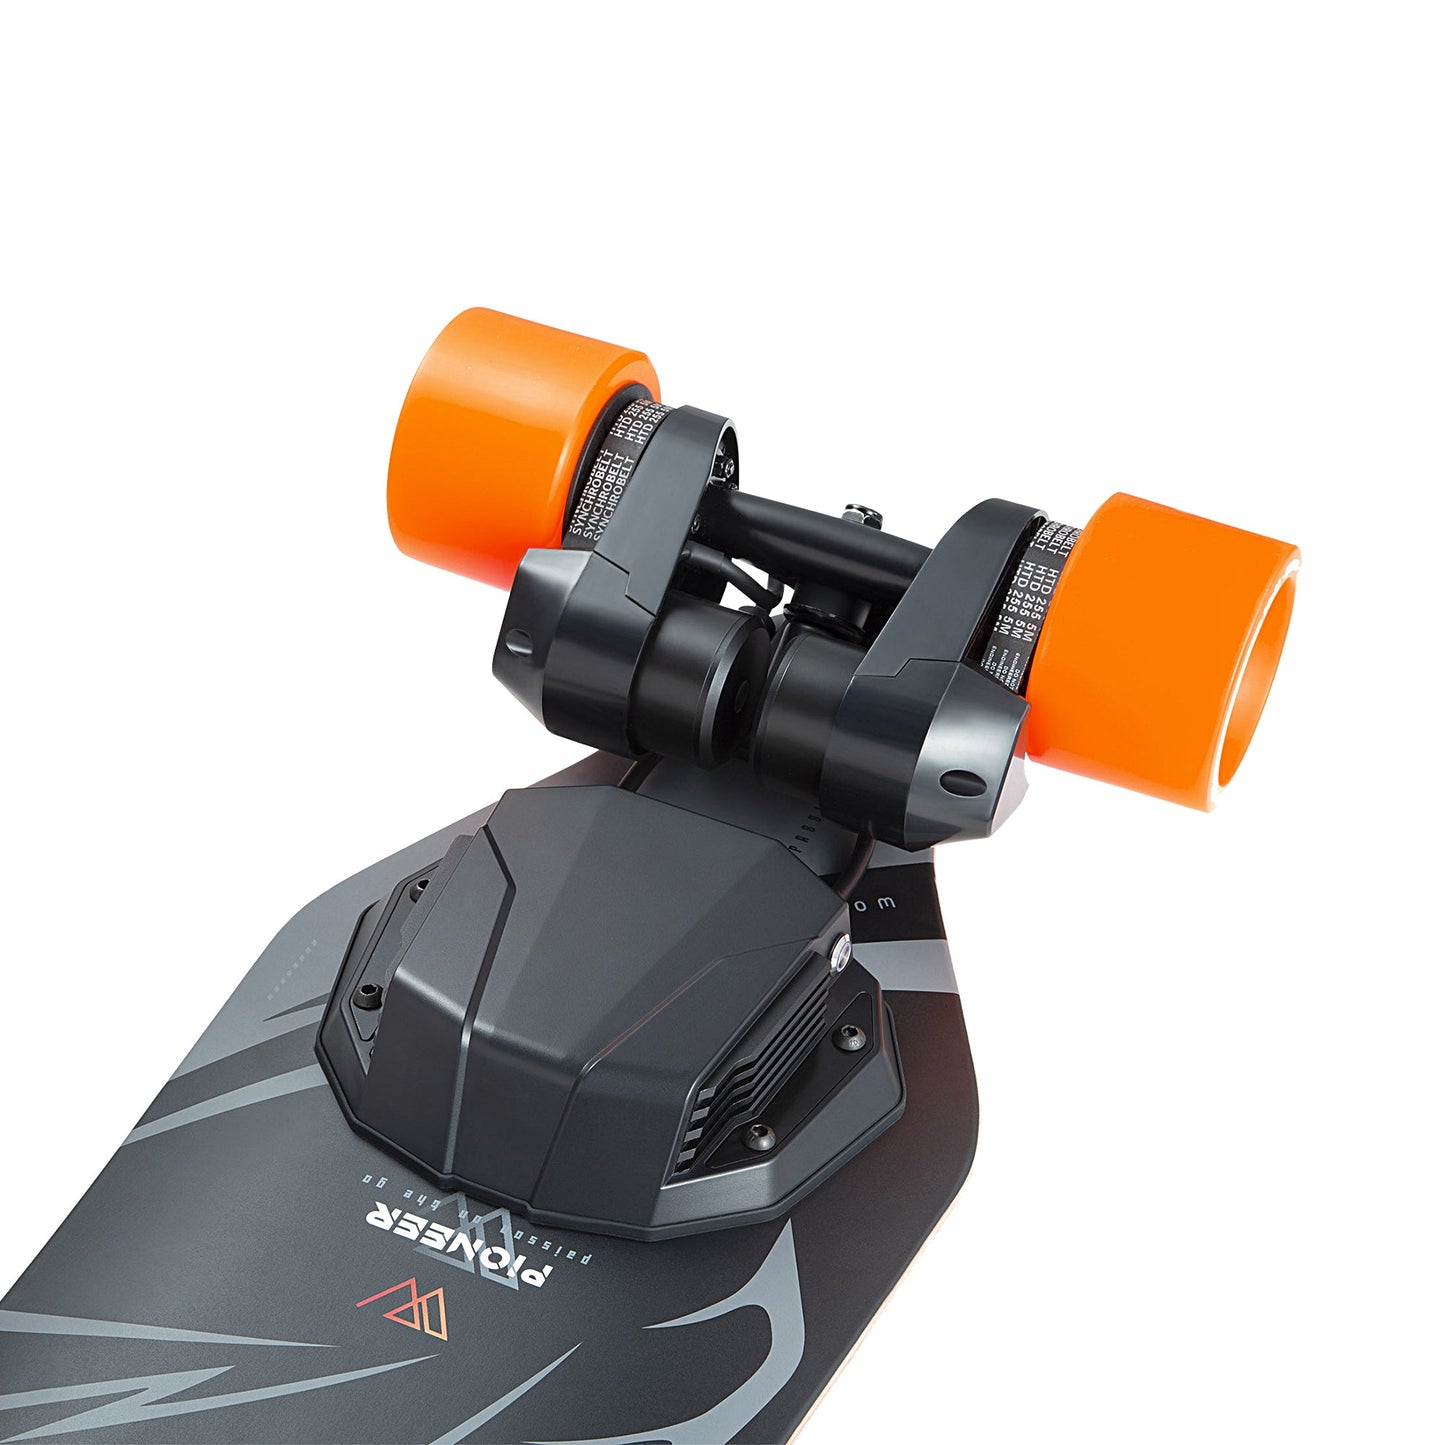 WowGo Pioneer X4 Electric Skateboard & Longboard